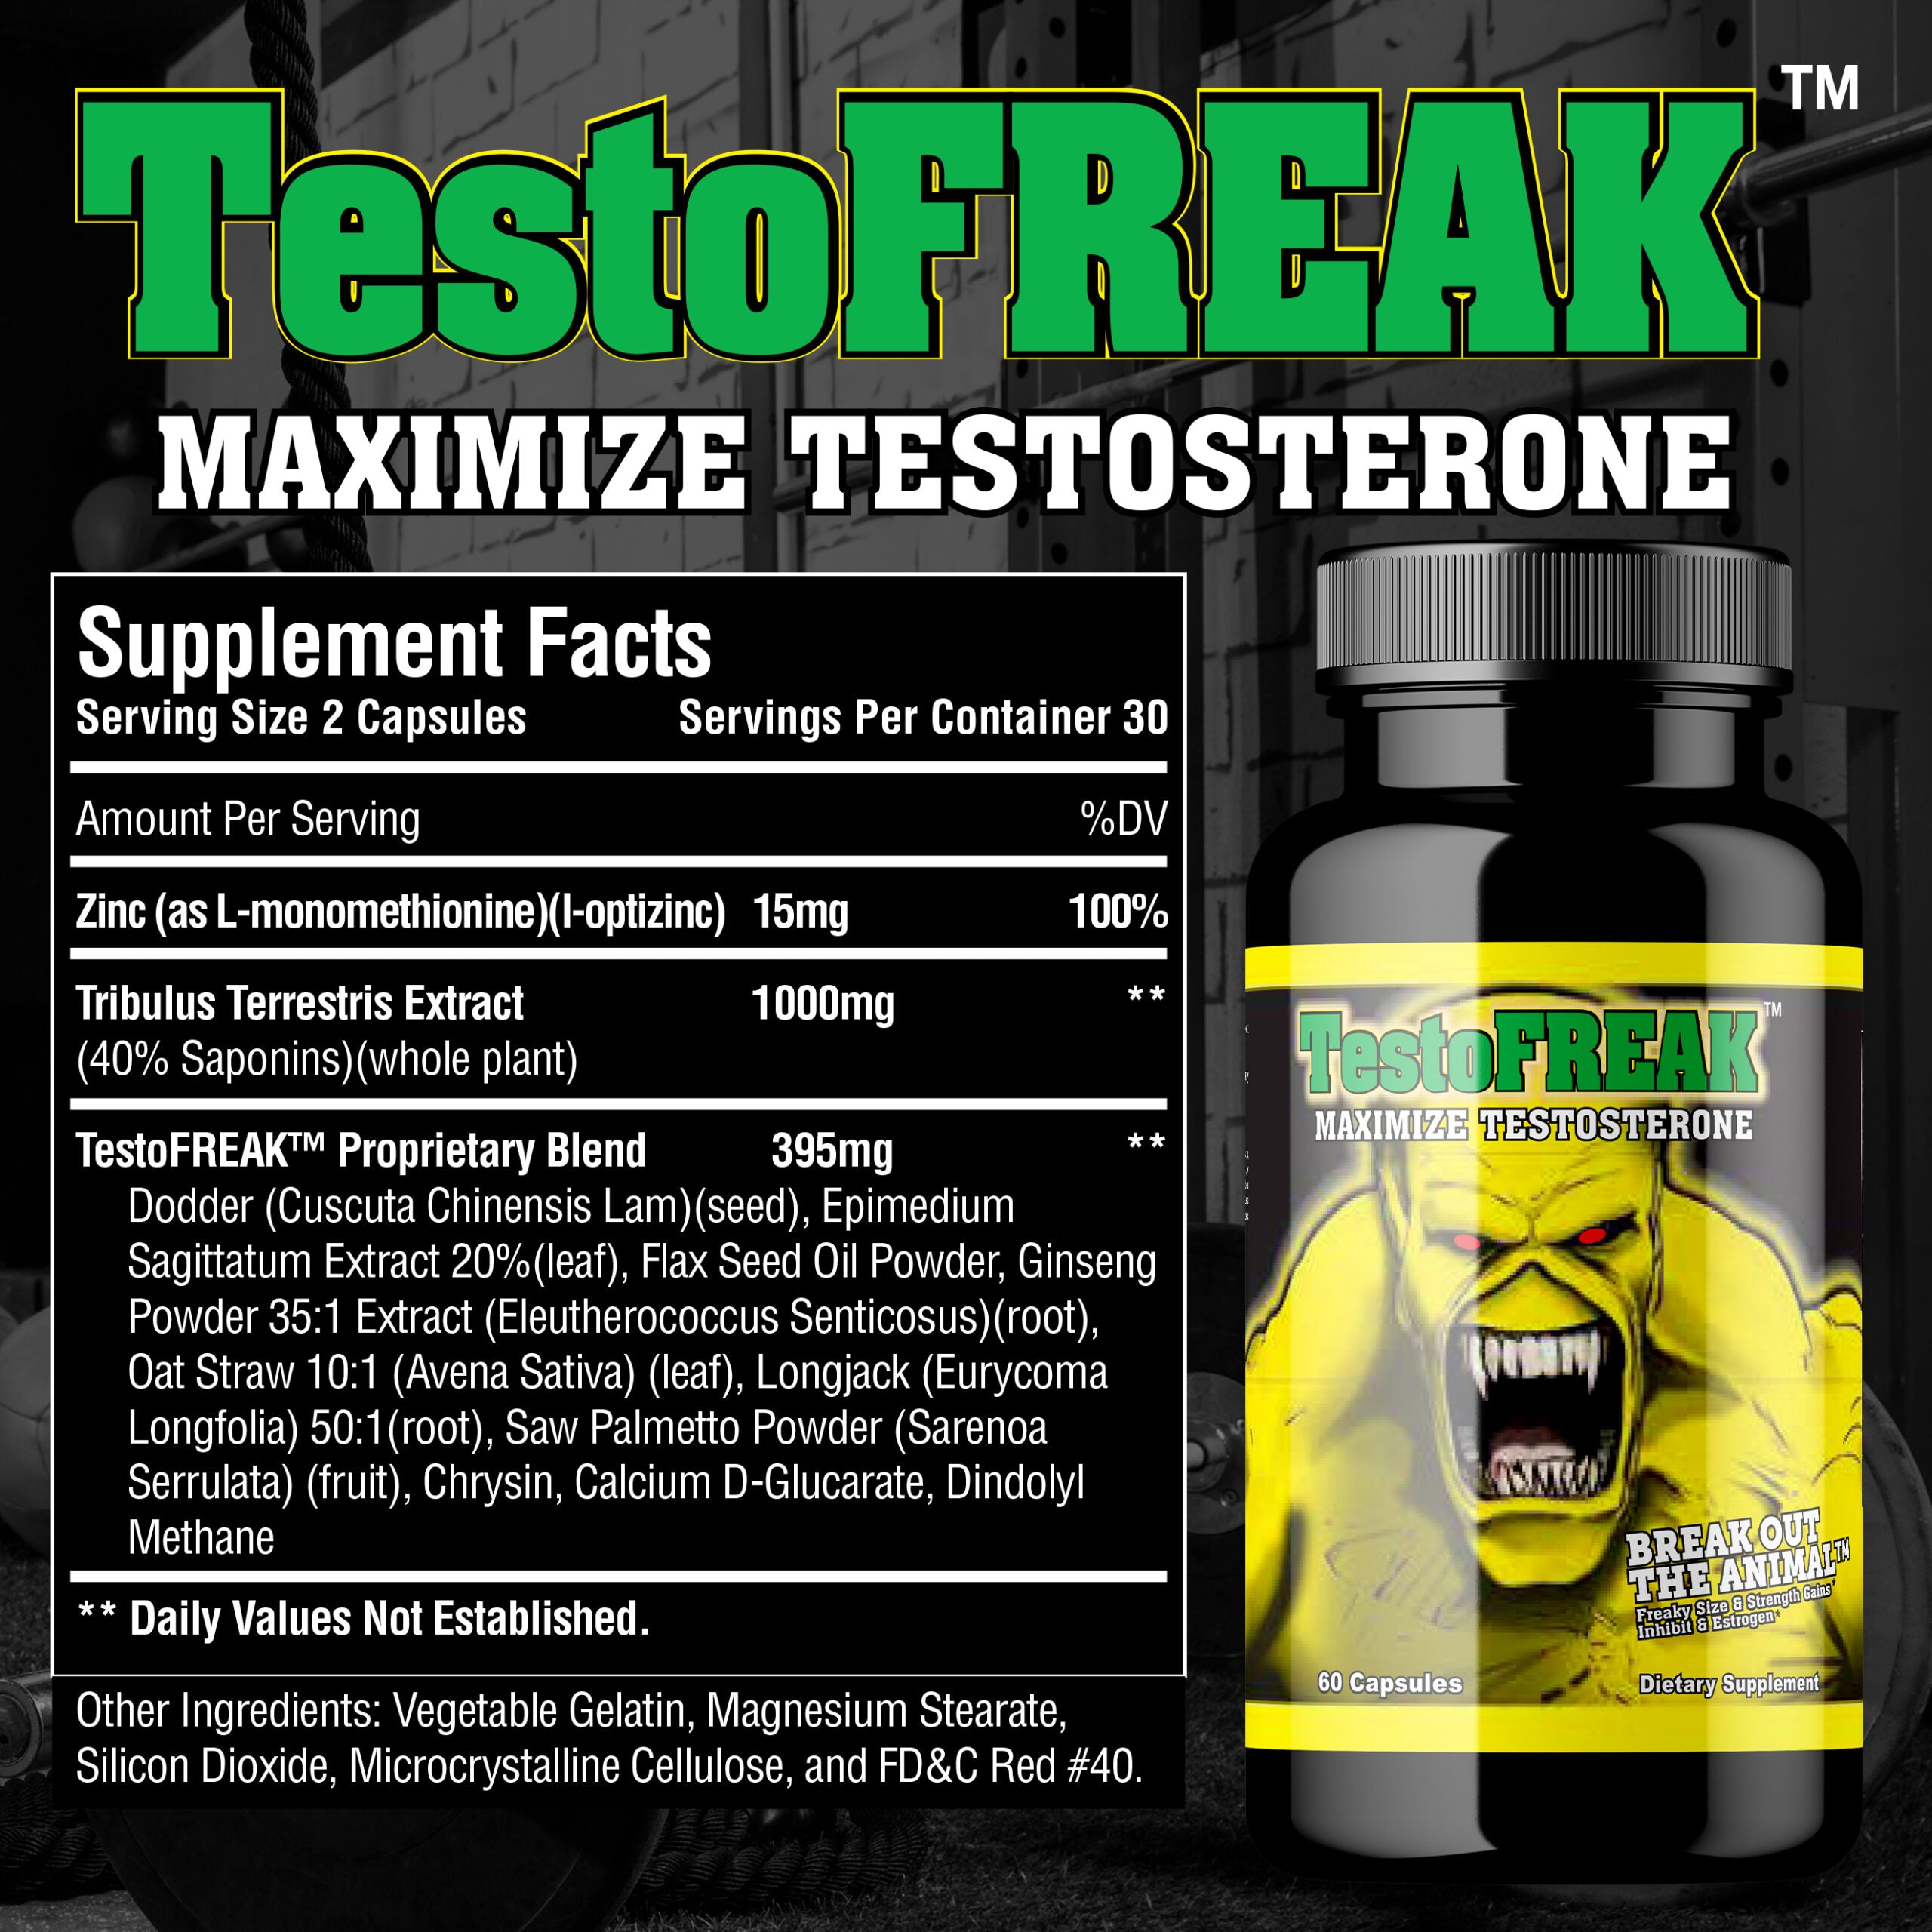 5 lbs Muscle Protein & TestoFreak Combo